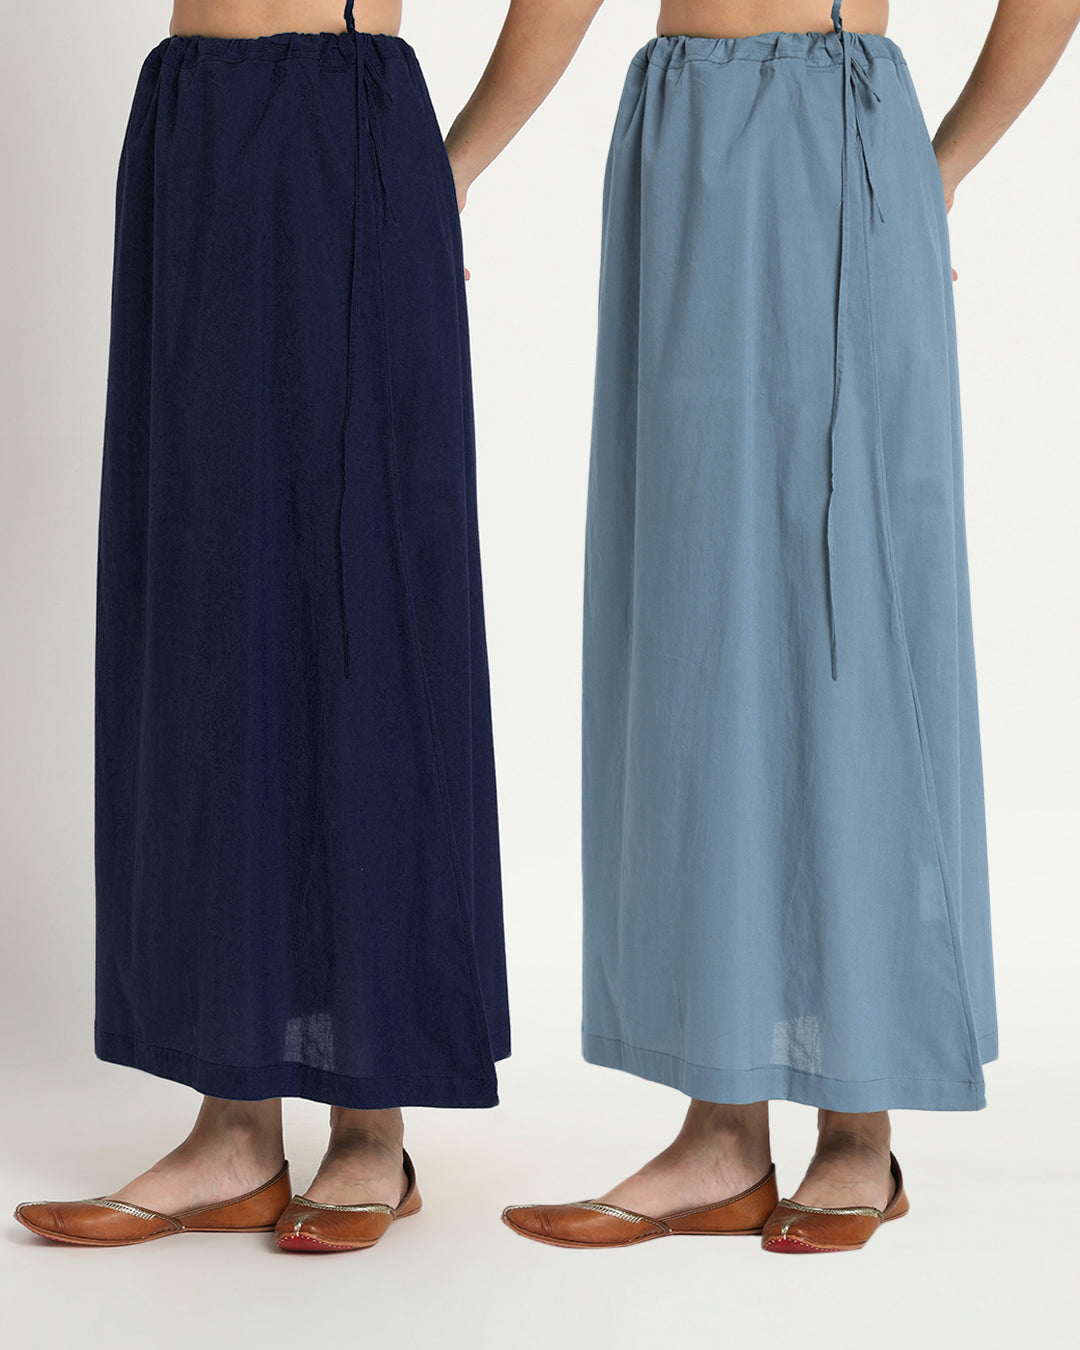 Combo: Midnight Blue & Blue Dawn Peekaboo Petticoat- Set of 2